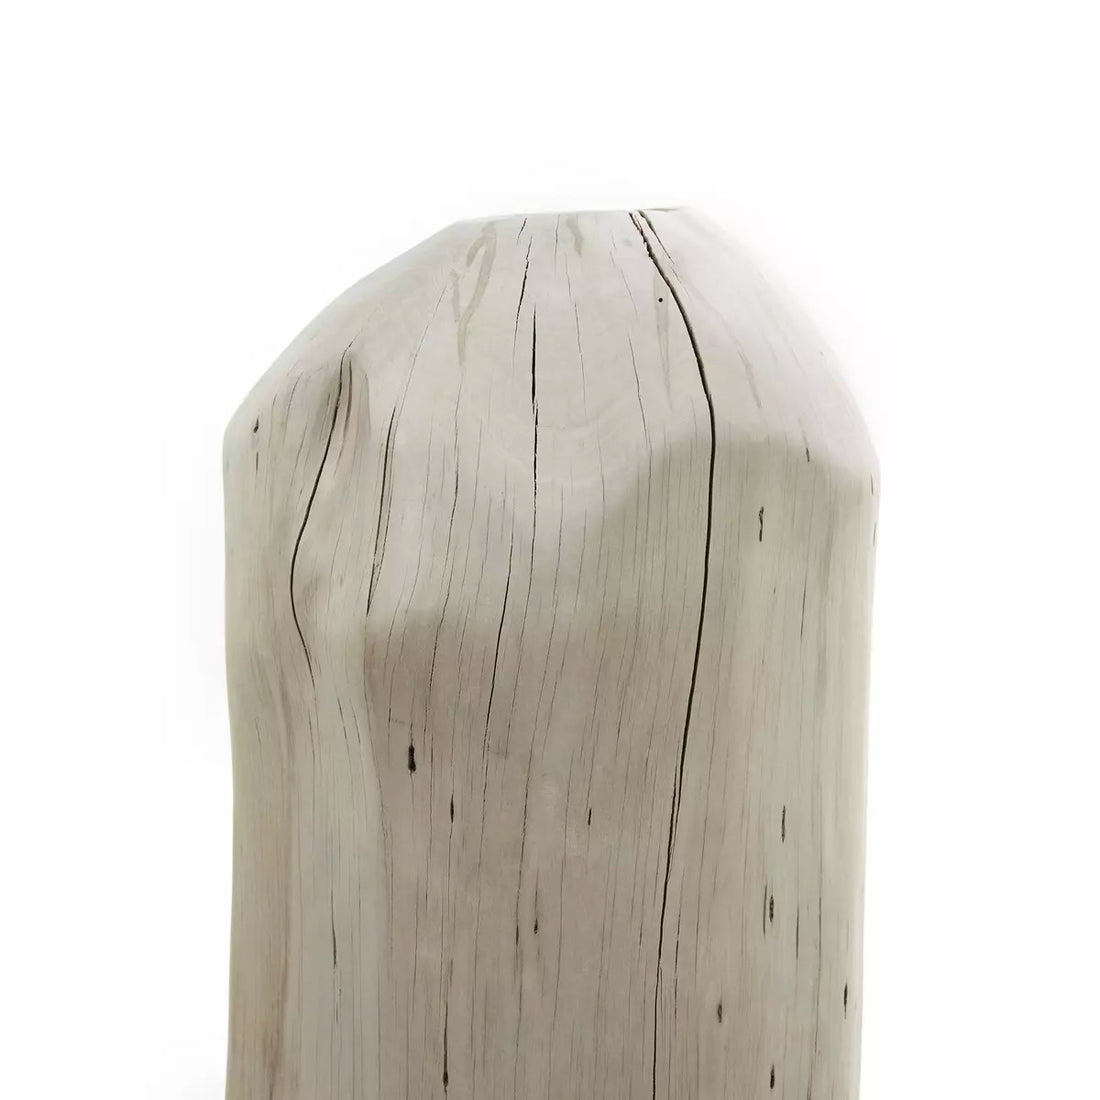 Oversized Ivory Reclaimed Wood Vessel